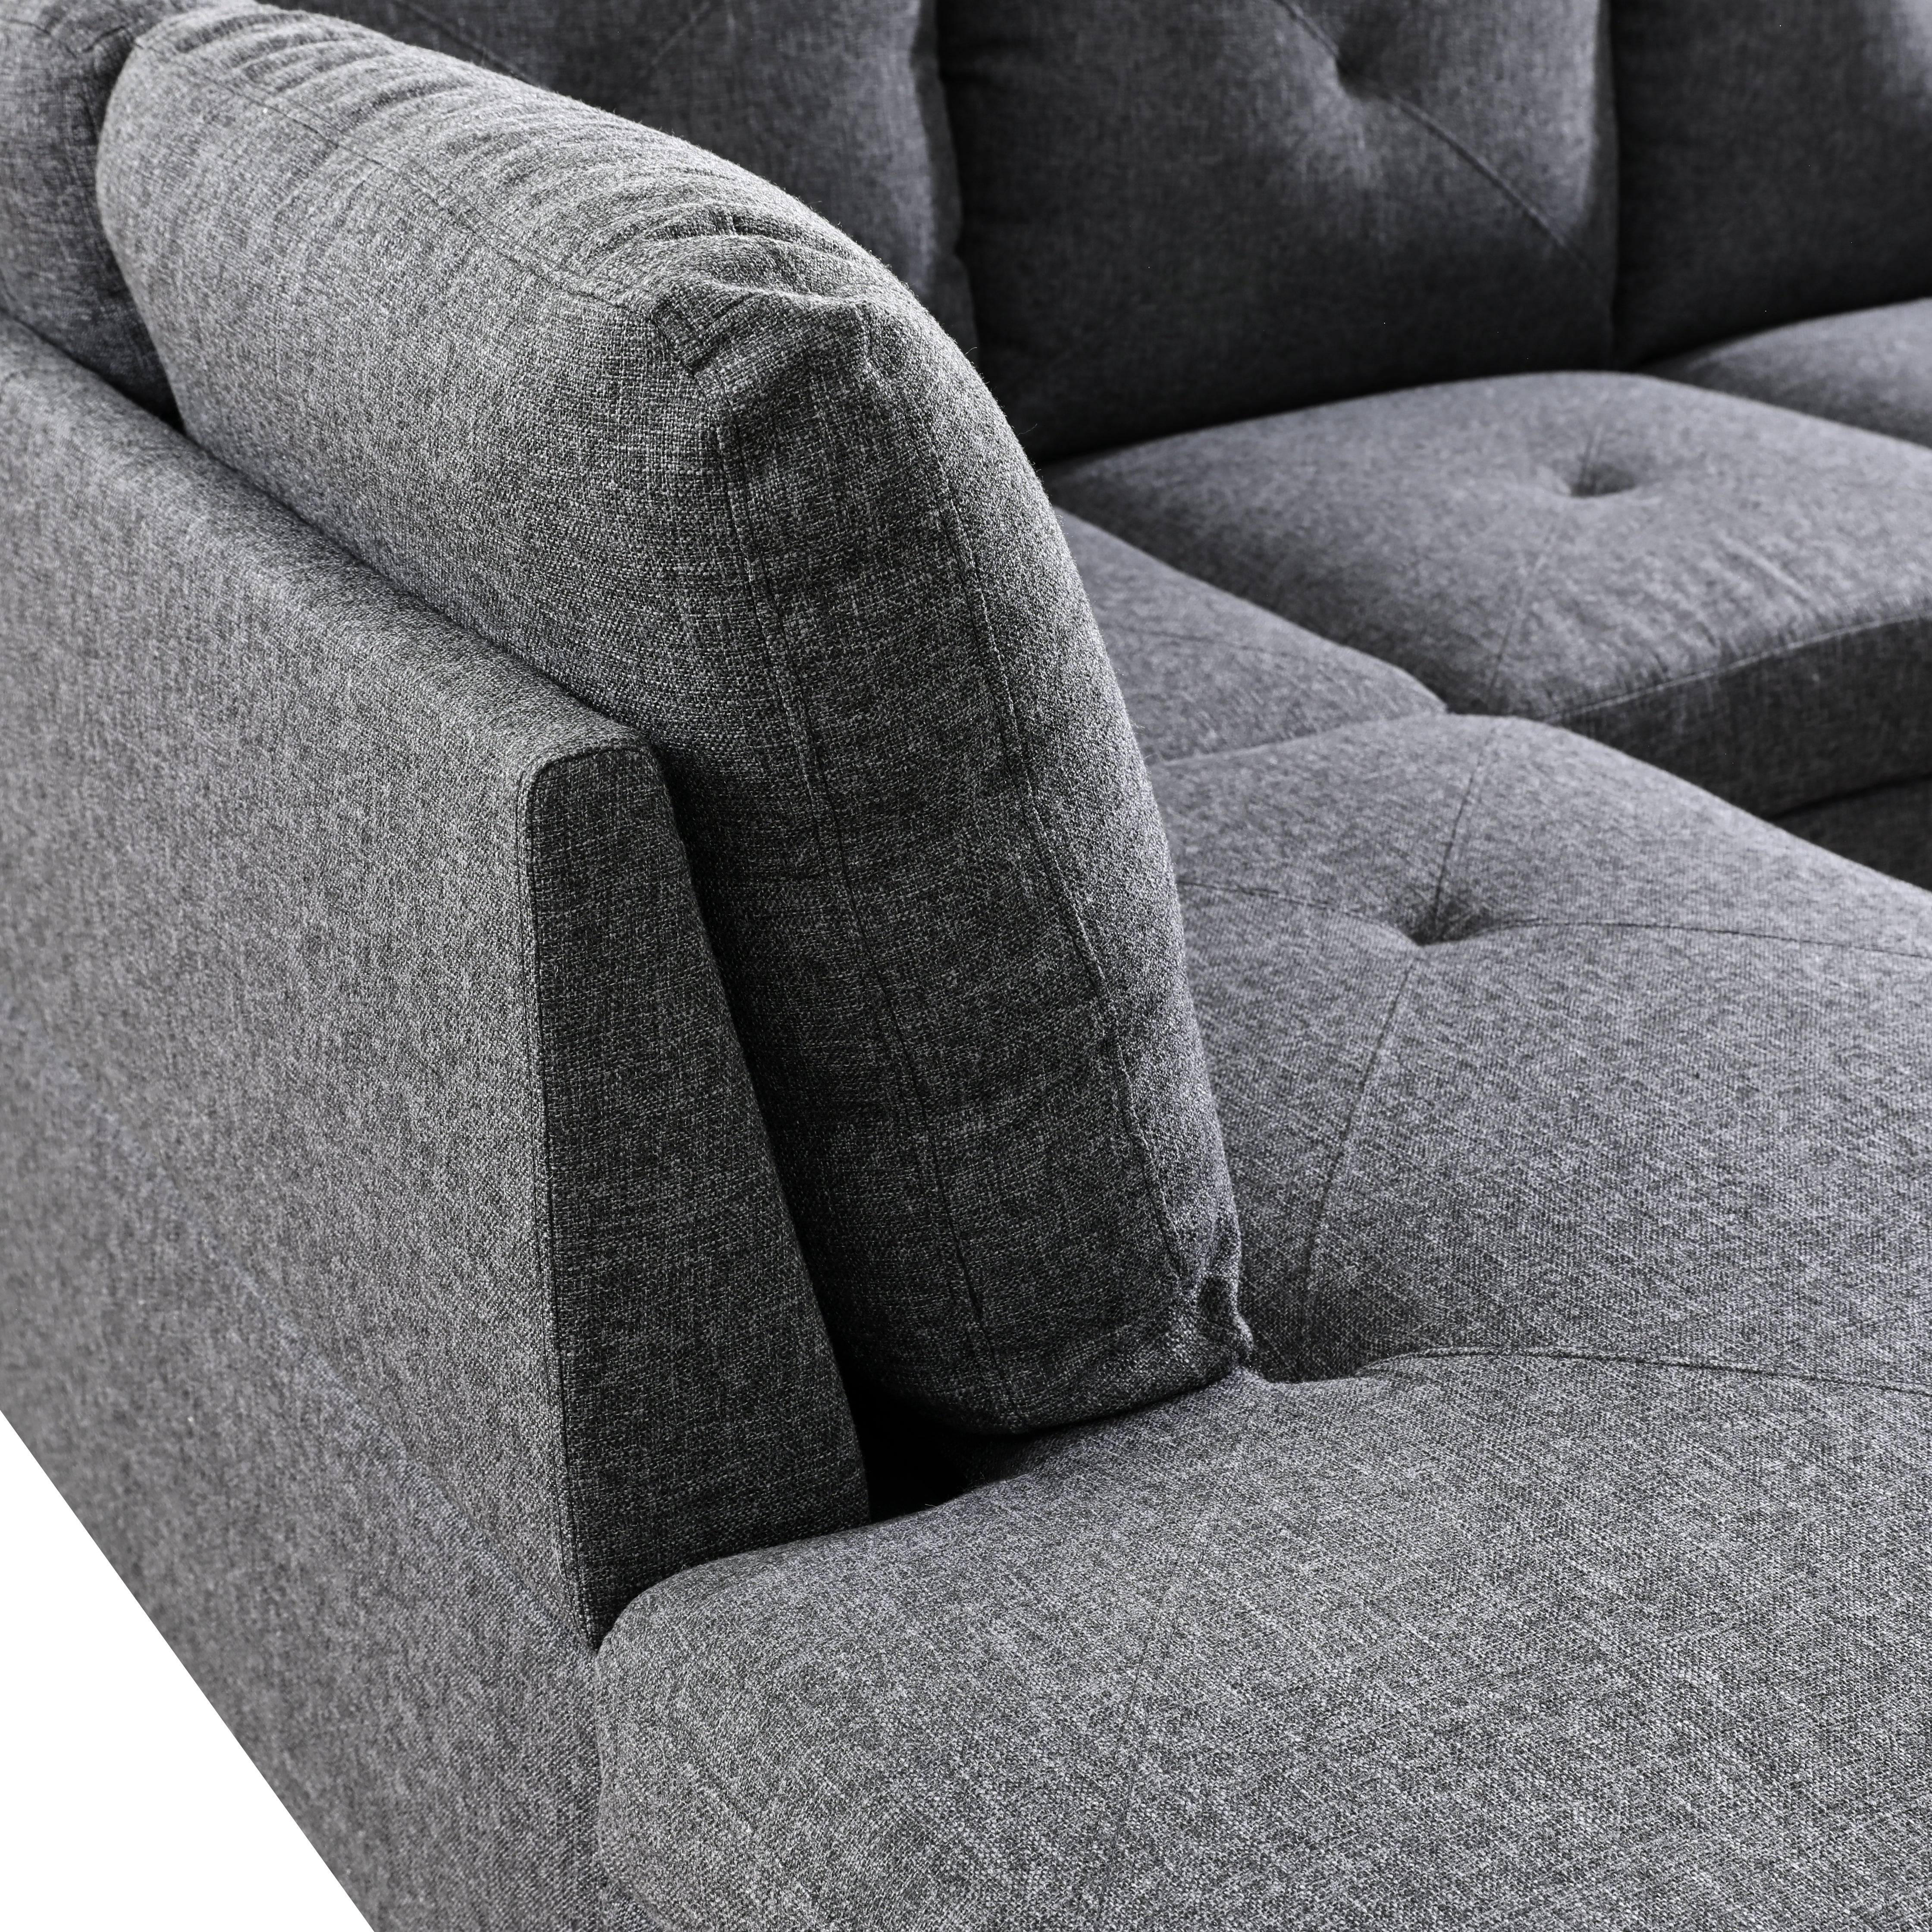 Ainehome Black Grey L-Shaped Linen Sofa Set